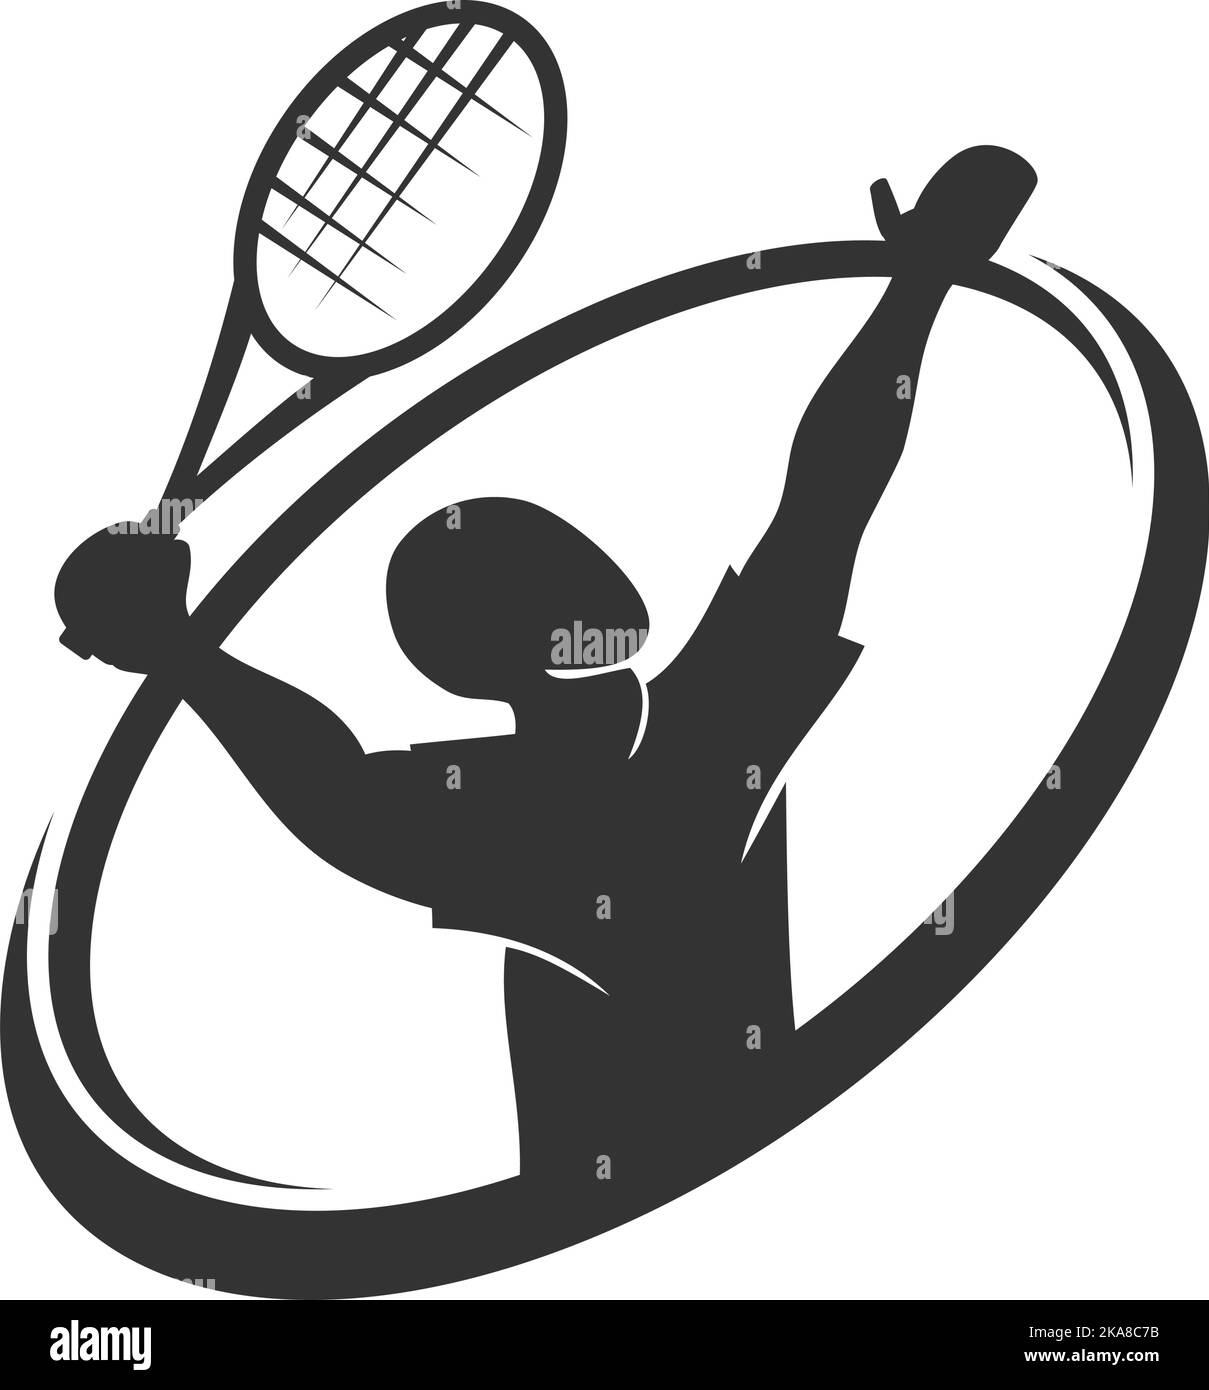 Tennis Sport Silhouette Logo Icon Illustration Brand Identity Stock Vector